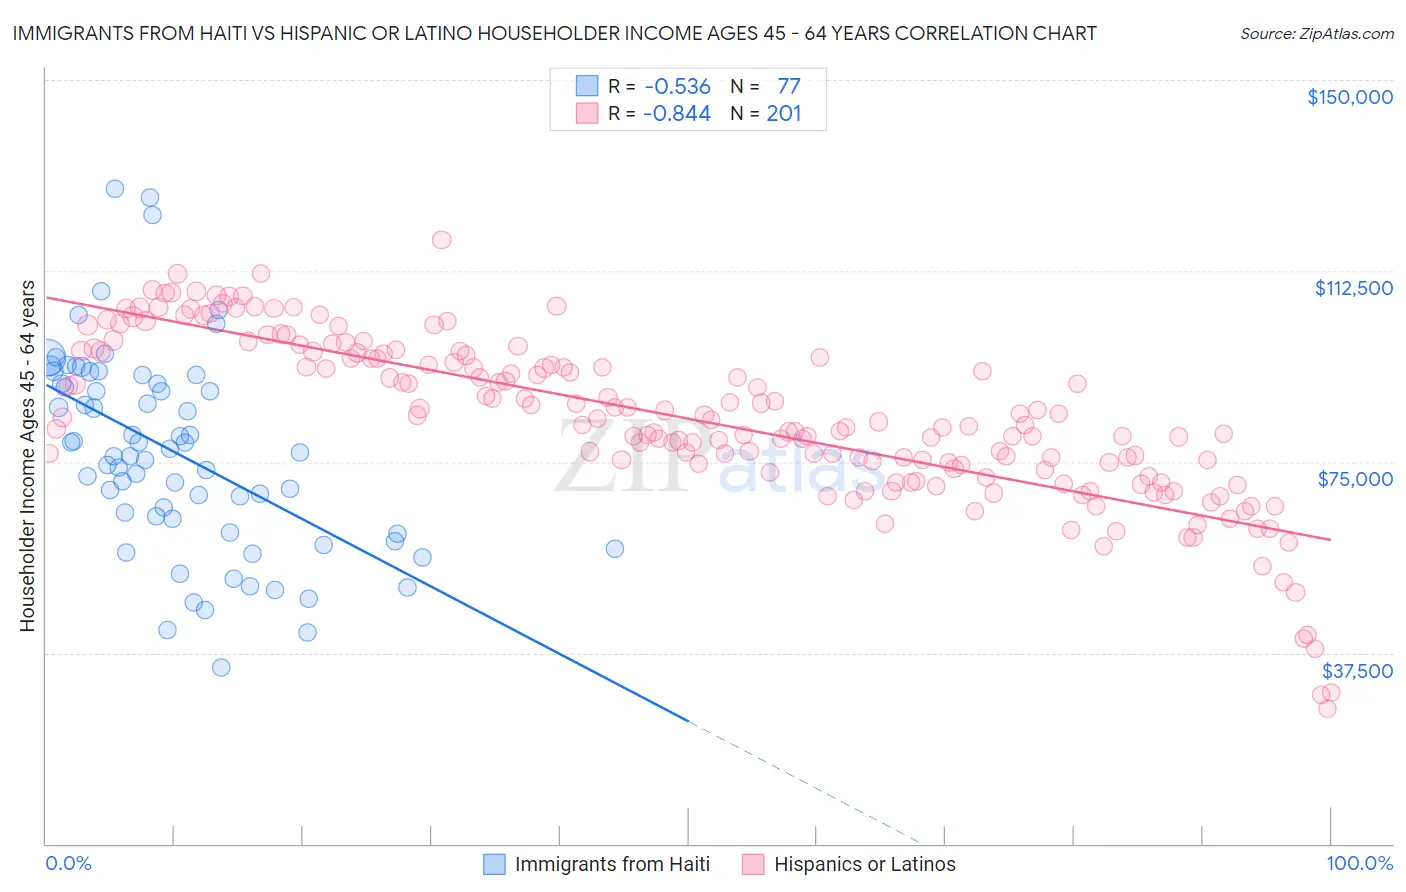 Immigrants from Haiti vs Hispanic or Latino Householder Income Ages 45 - 64 years